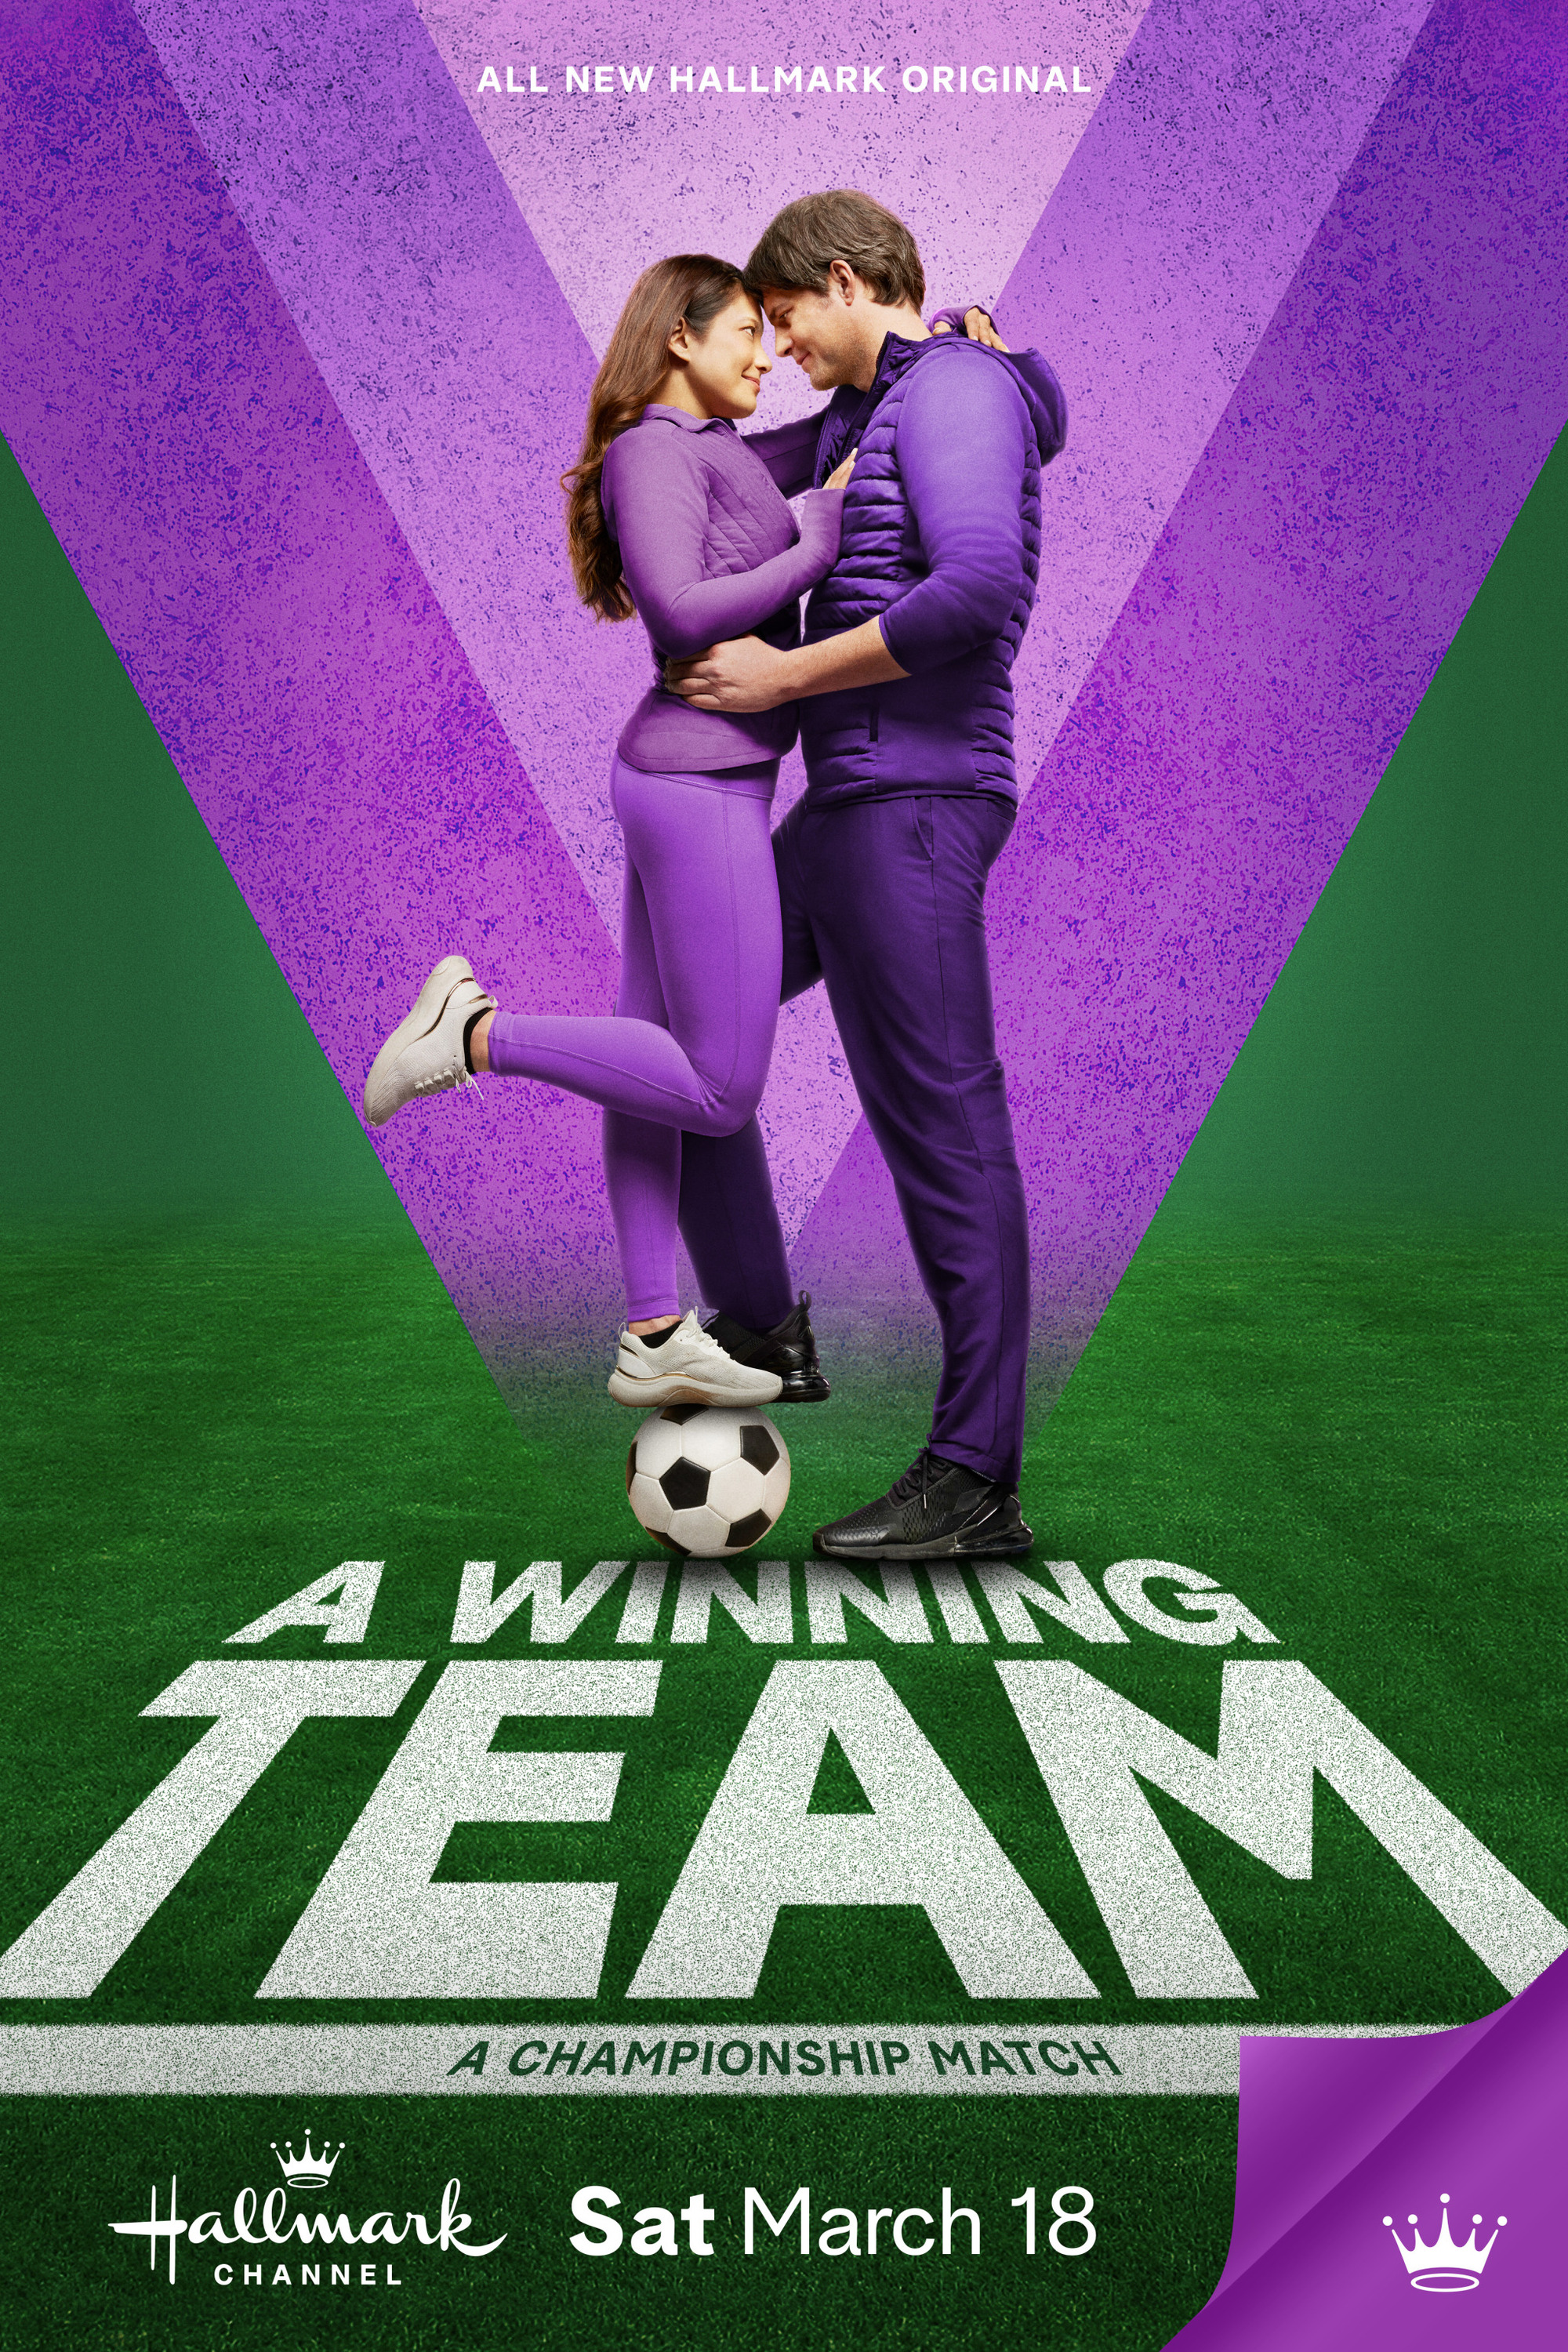 Mega Sized Movie Poster Image for Winning Team 